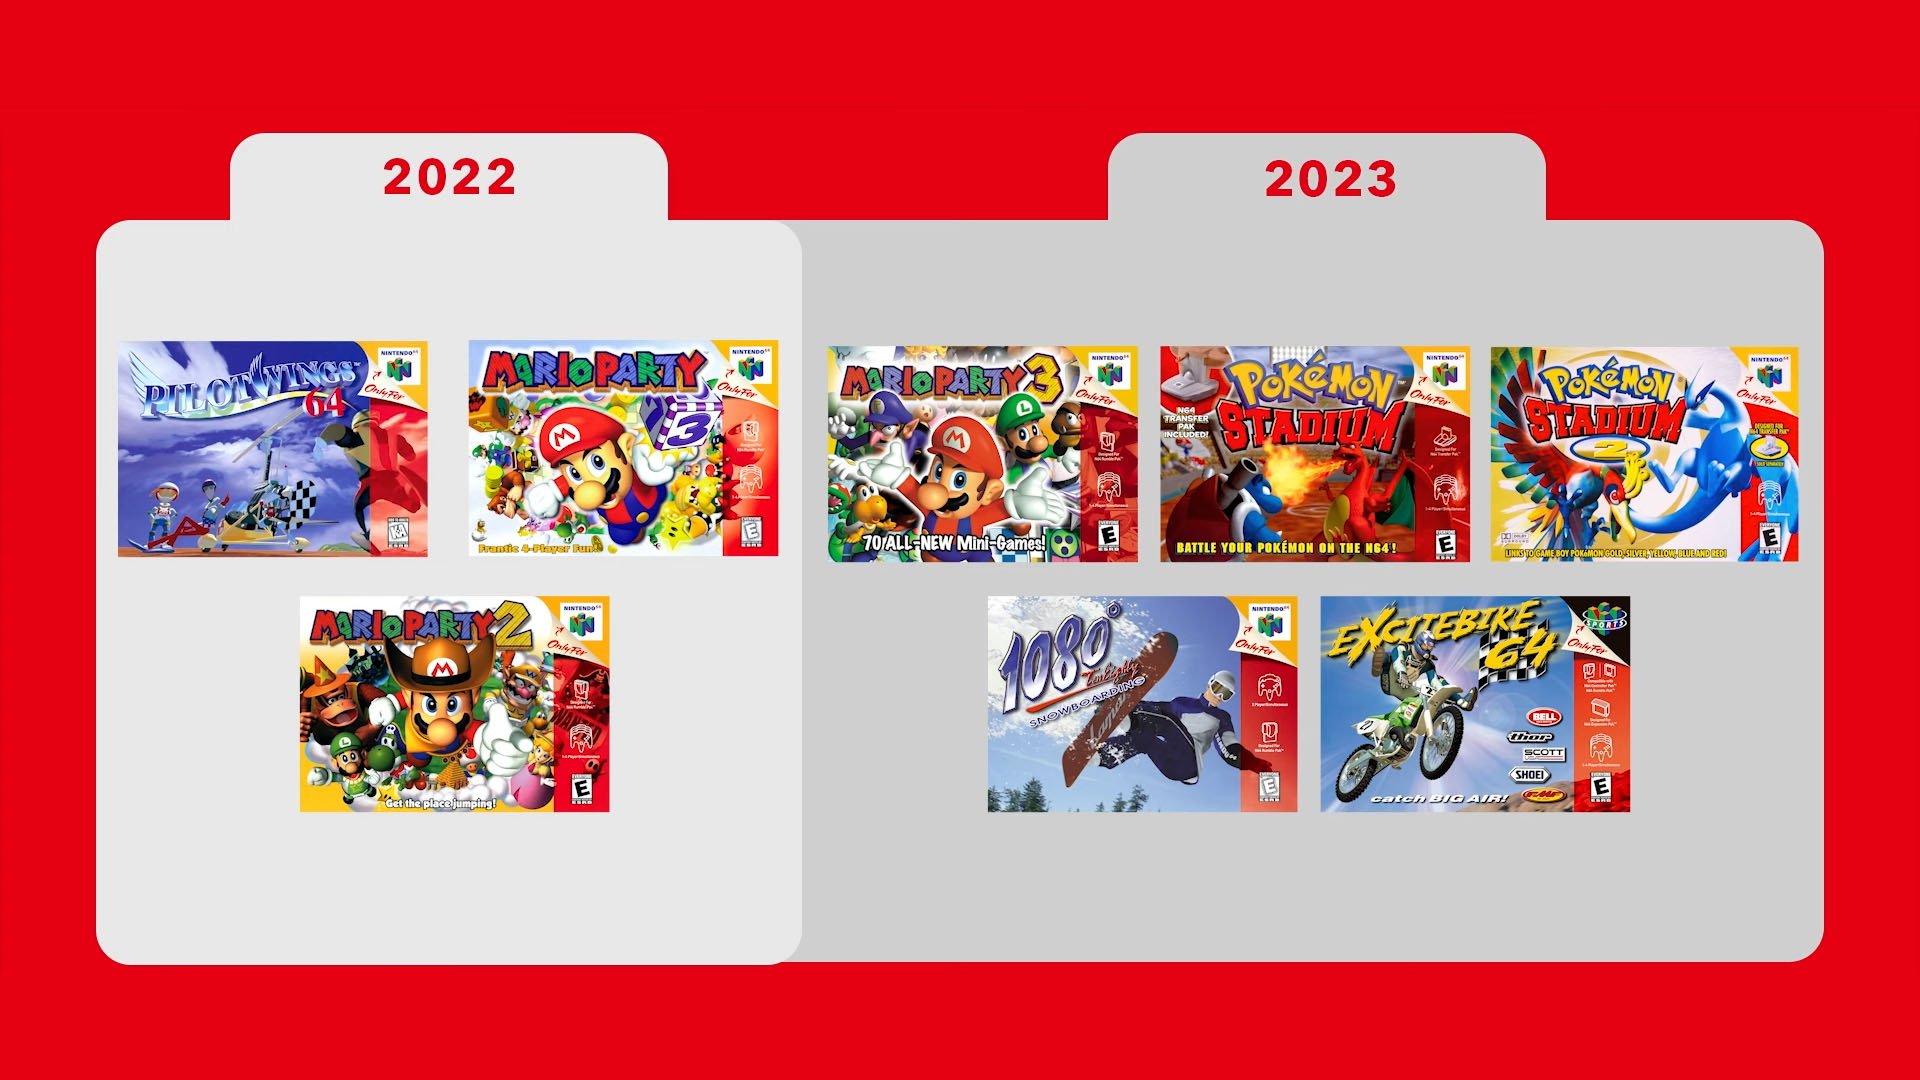 List of games presented in 1080p, Nintendo